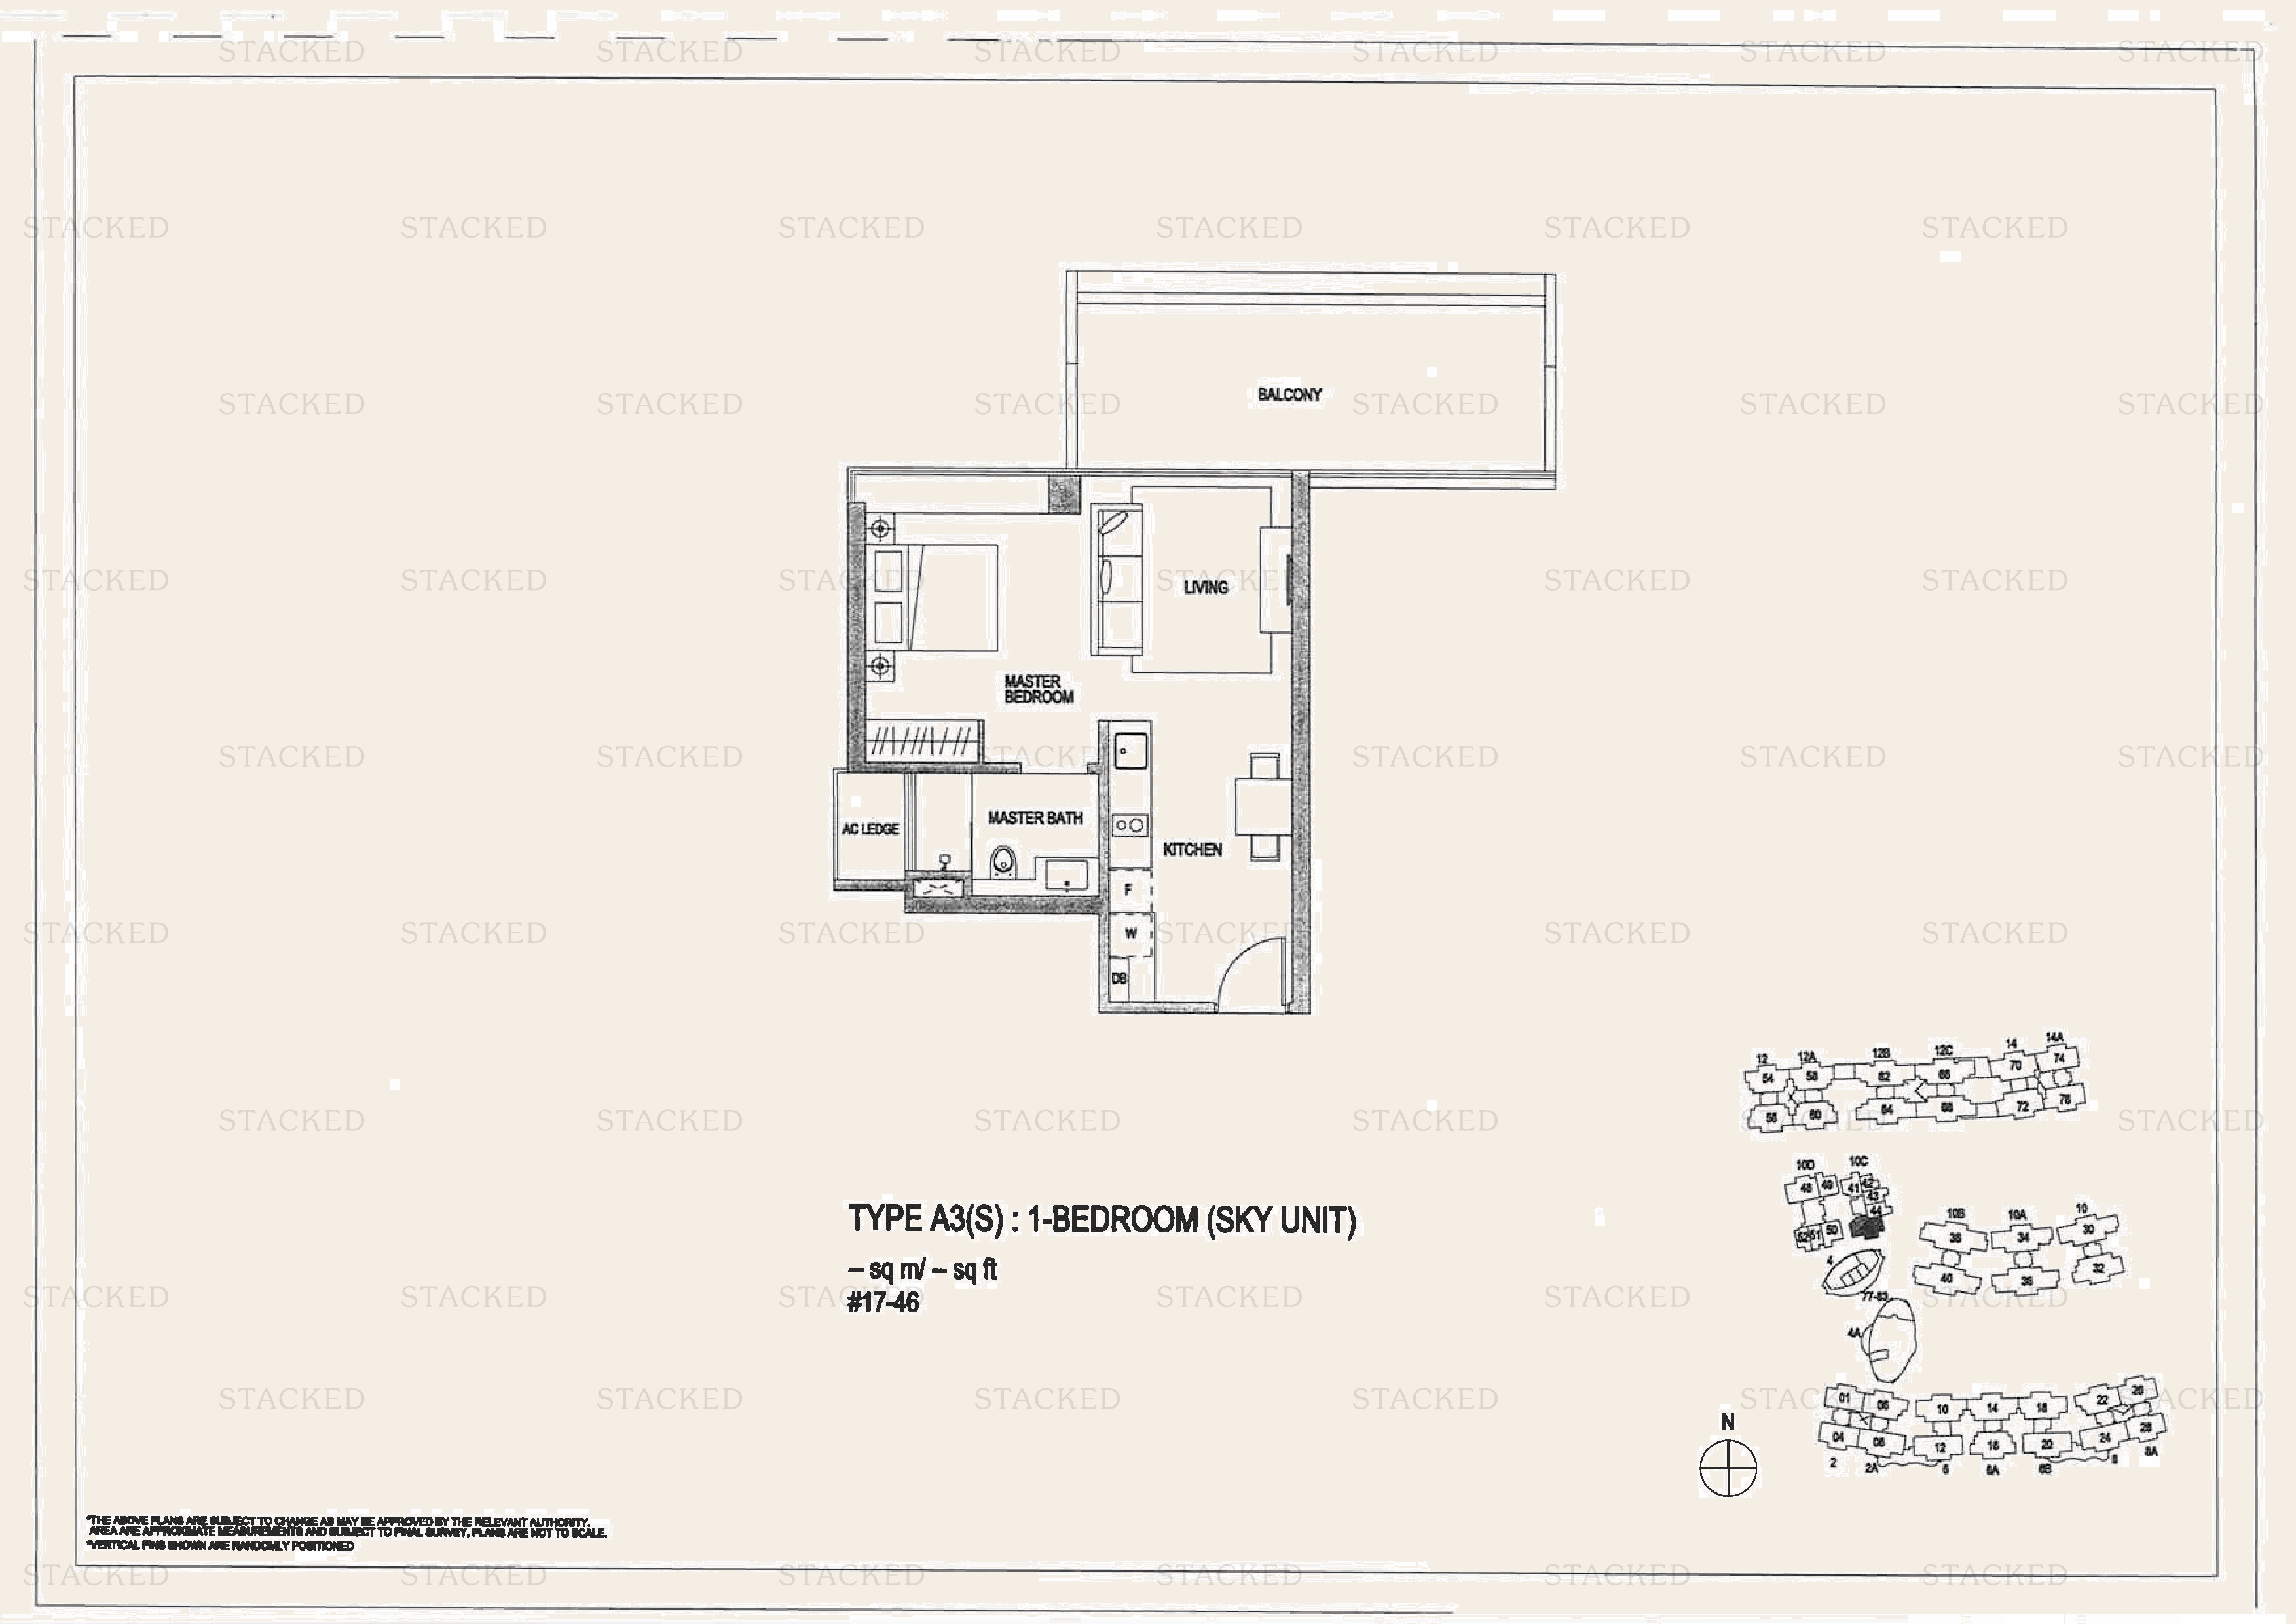 The Minton floor plan